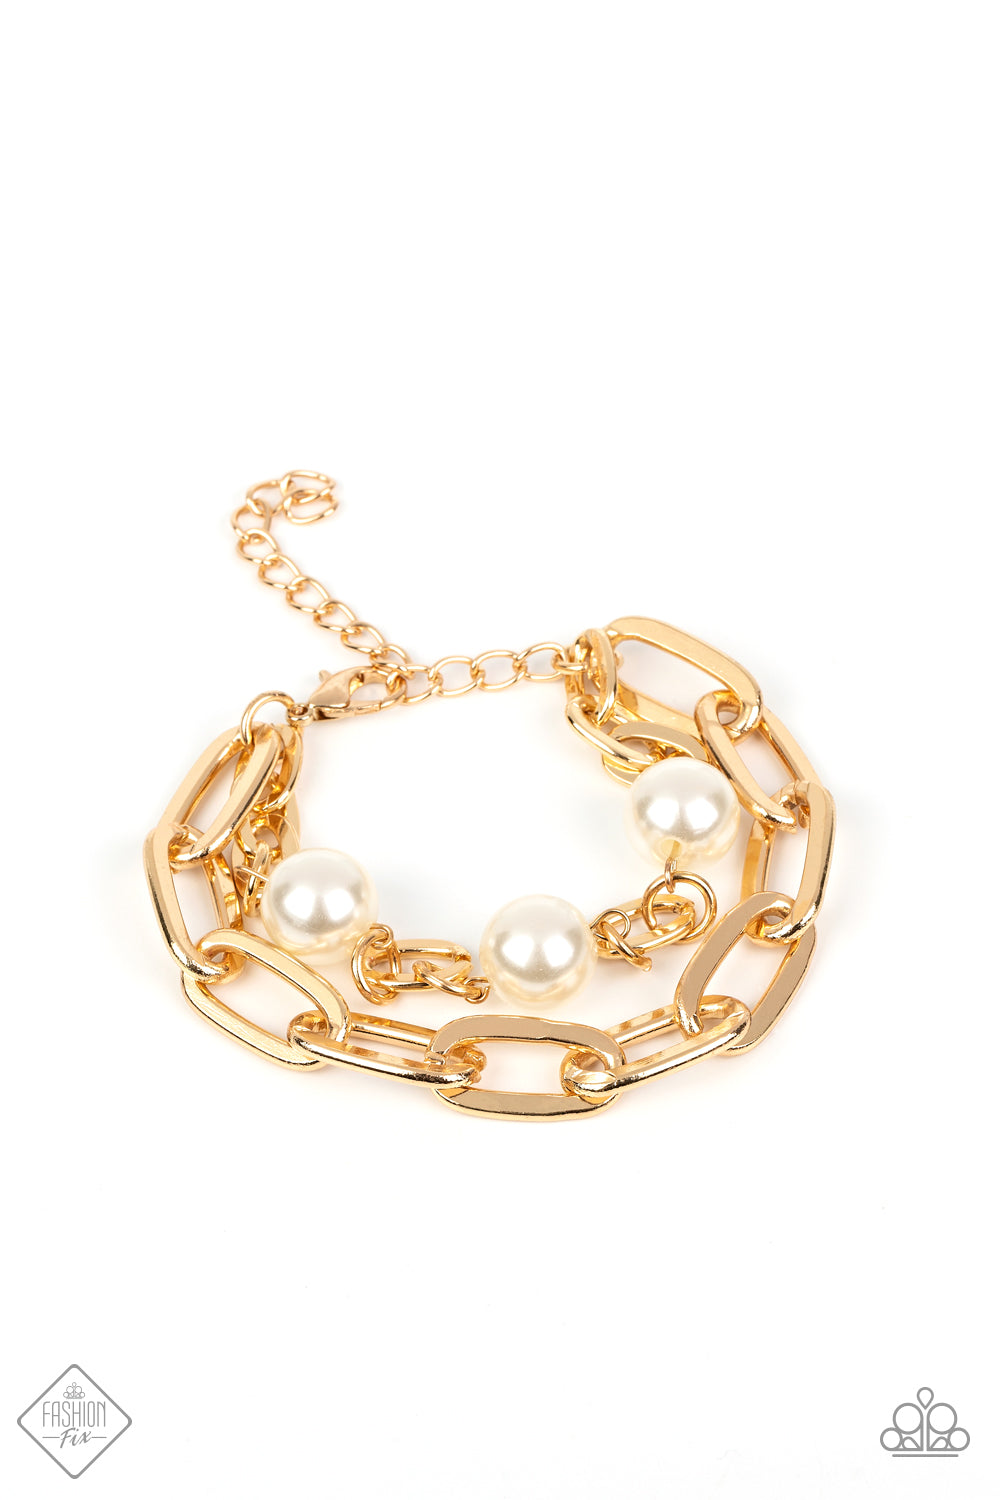 Paparazzi Nautical Mileage Gold Clasp Bracelet - Fashion Fix Fiercely 5th Avenue October 2022